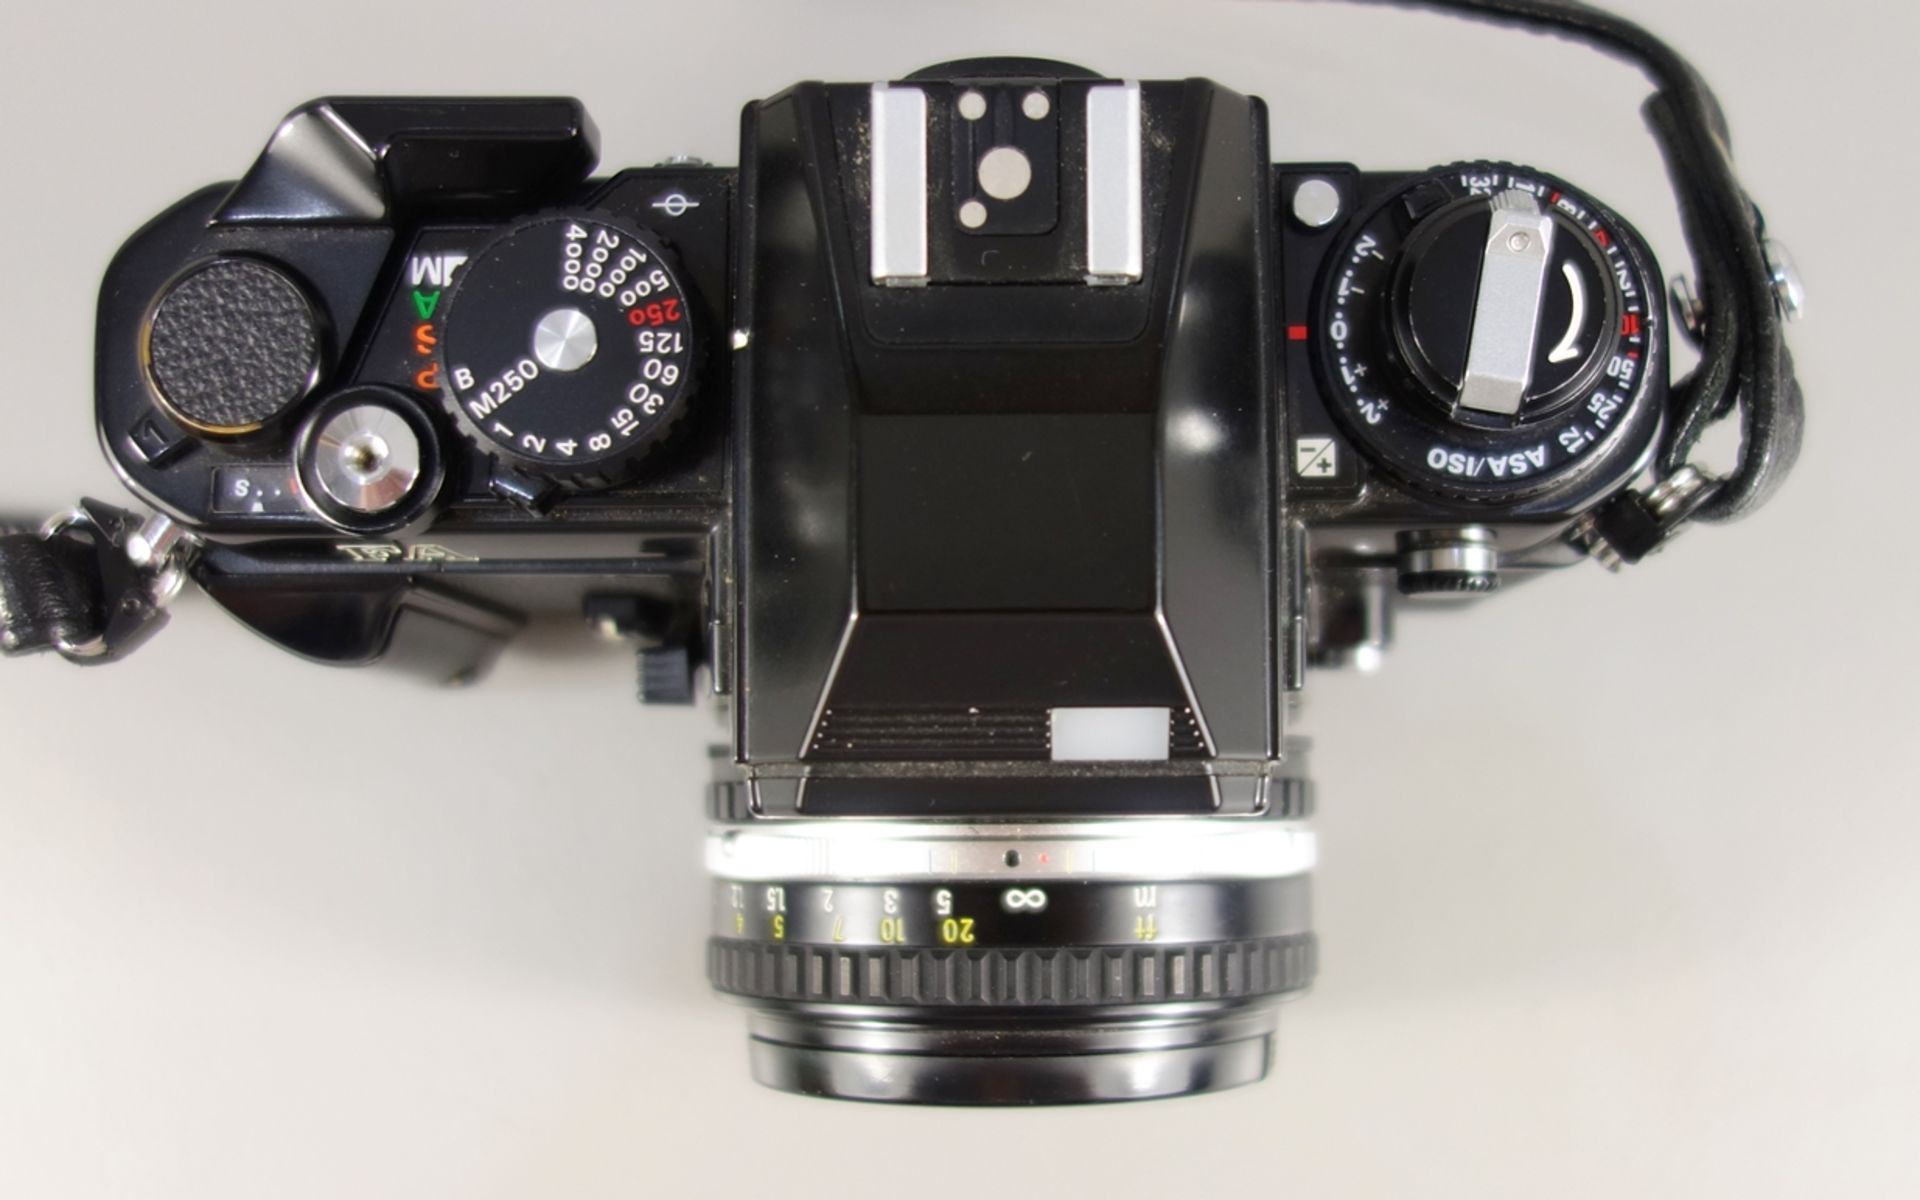 Nikon FA, Spiegelreflexkamera, schwarz, Serien-Nr. 5162031, mit Objektiv Nikon Lens Series E, 50mm - Bild 2 aus 4